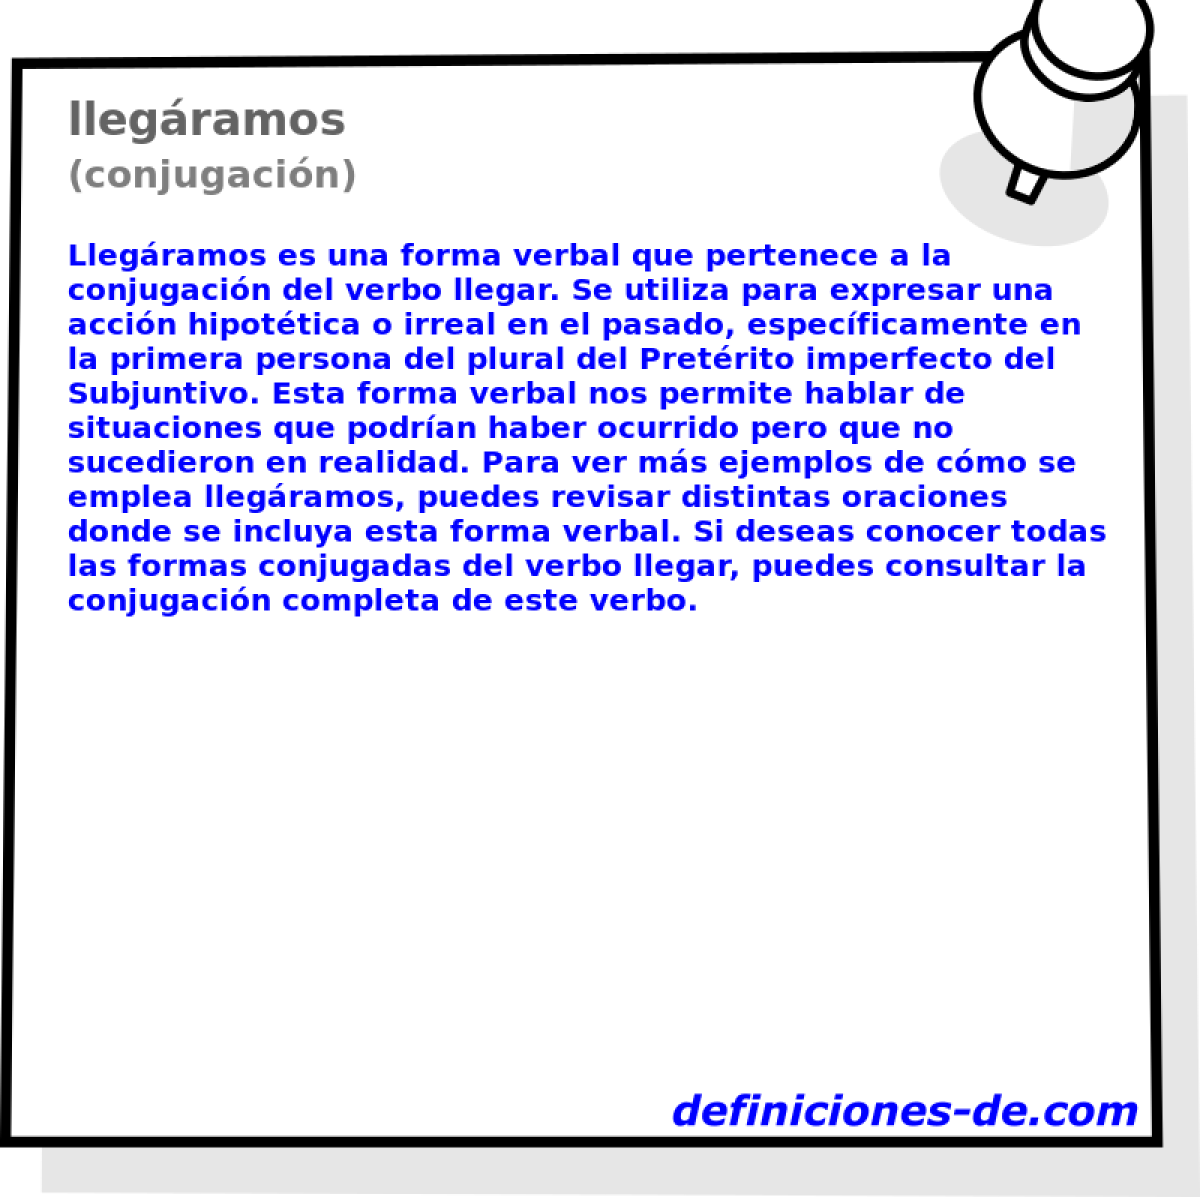 llegramos (conjugacin)